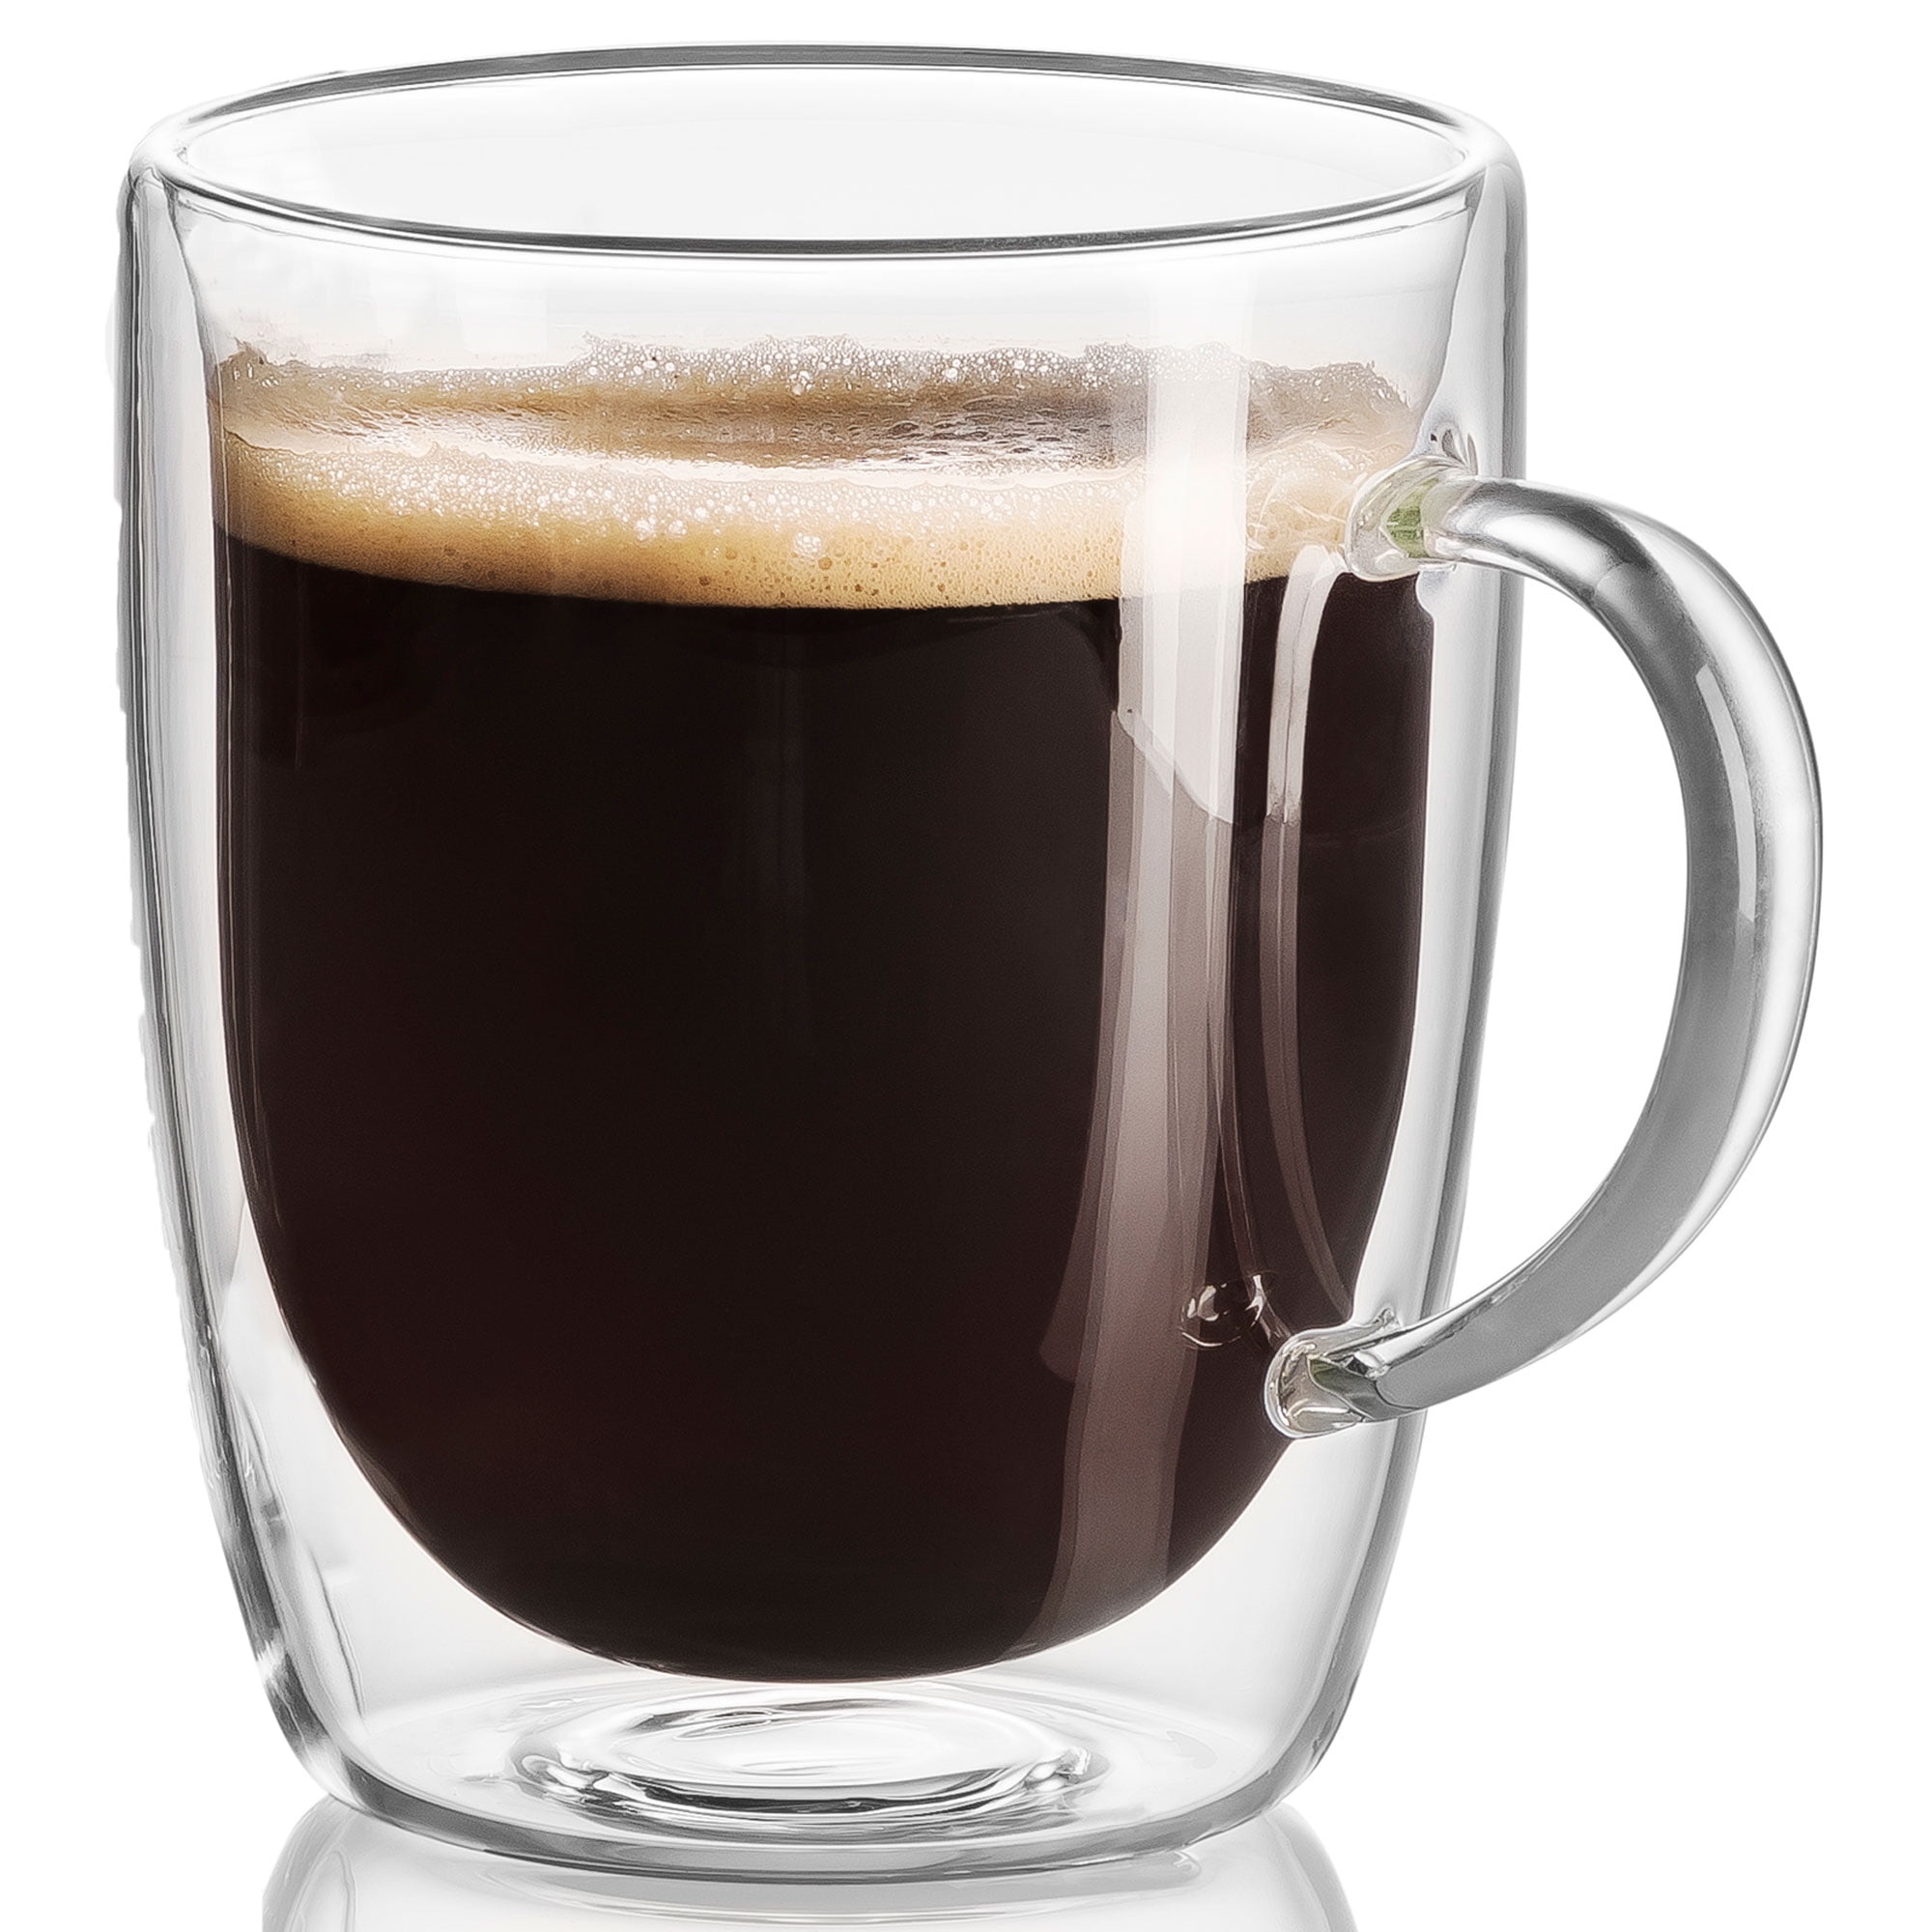 Double wall glass mug 17 Ounce - insulated coffee mugs - glass coffee